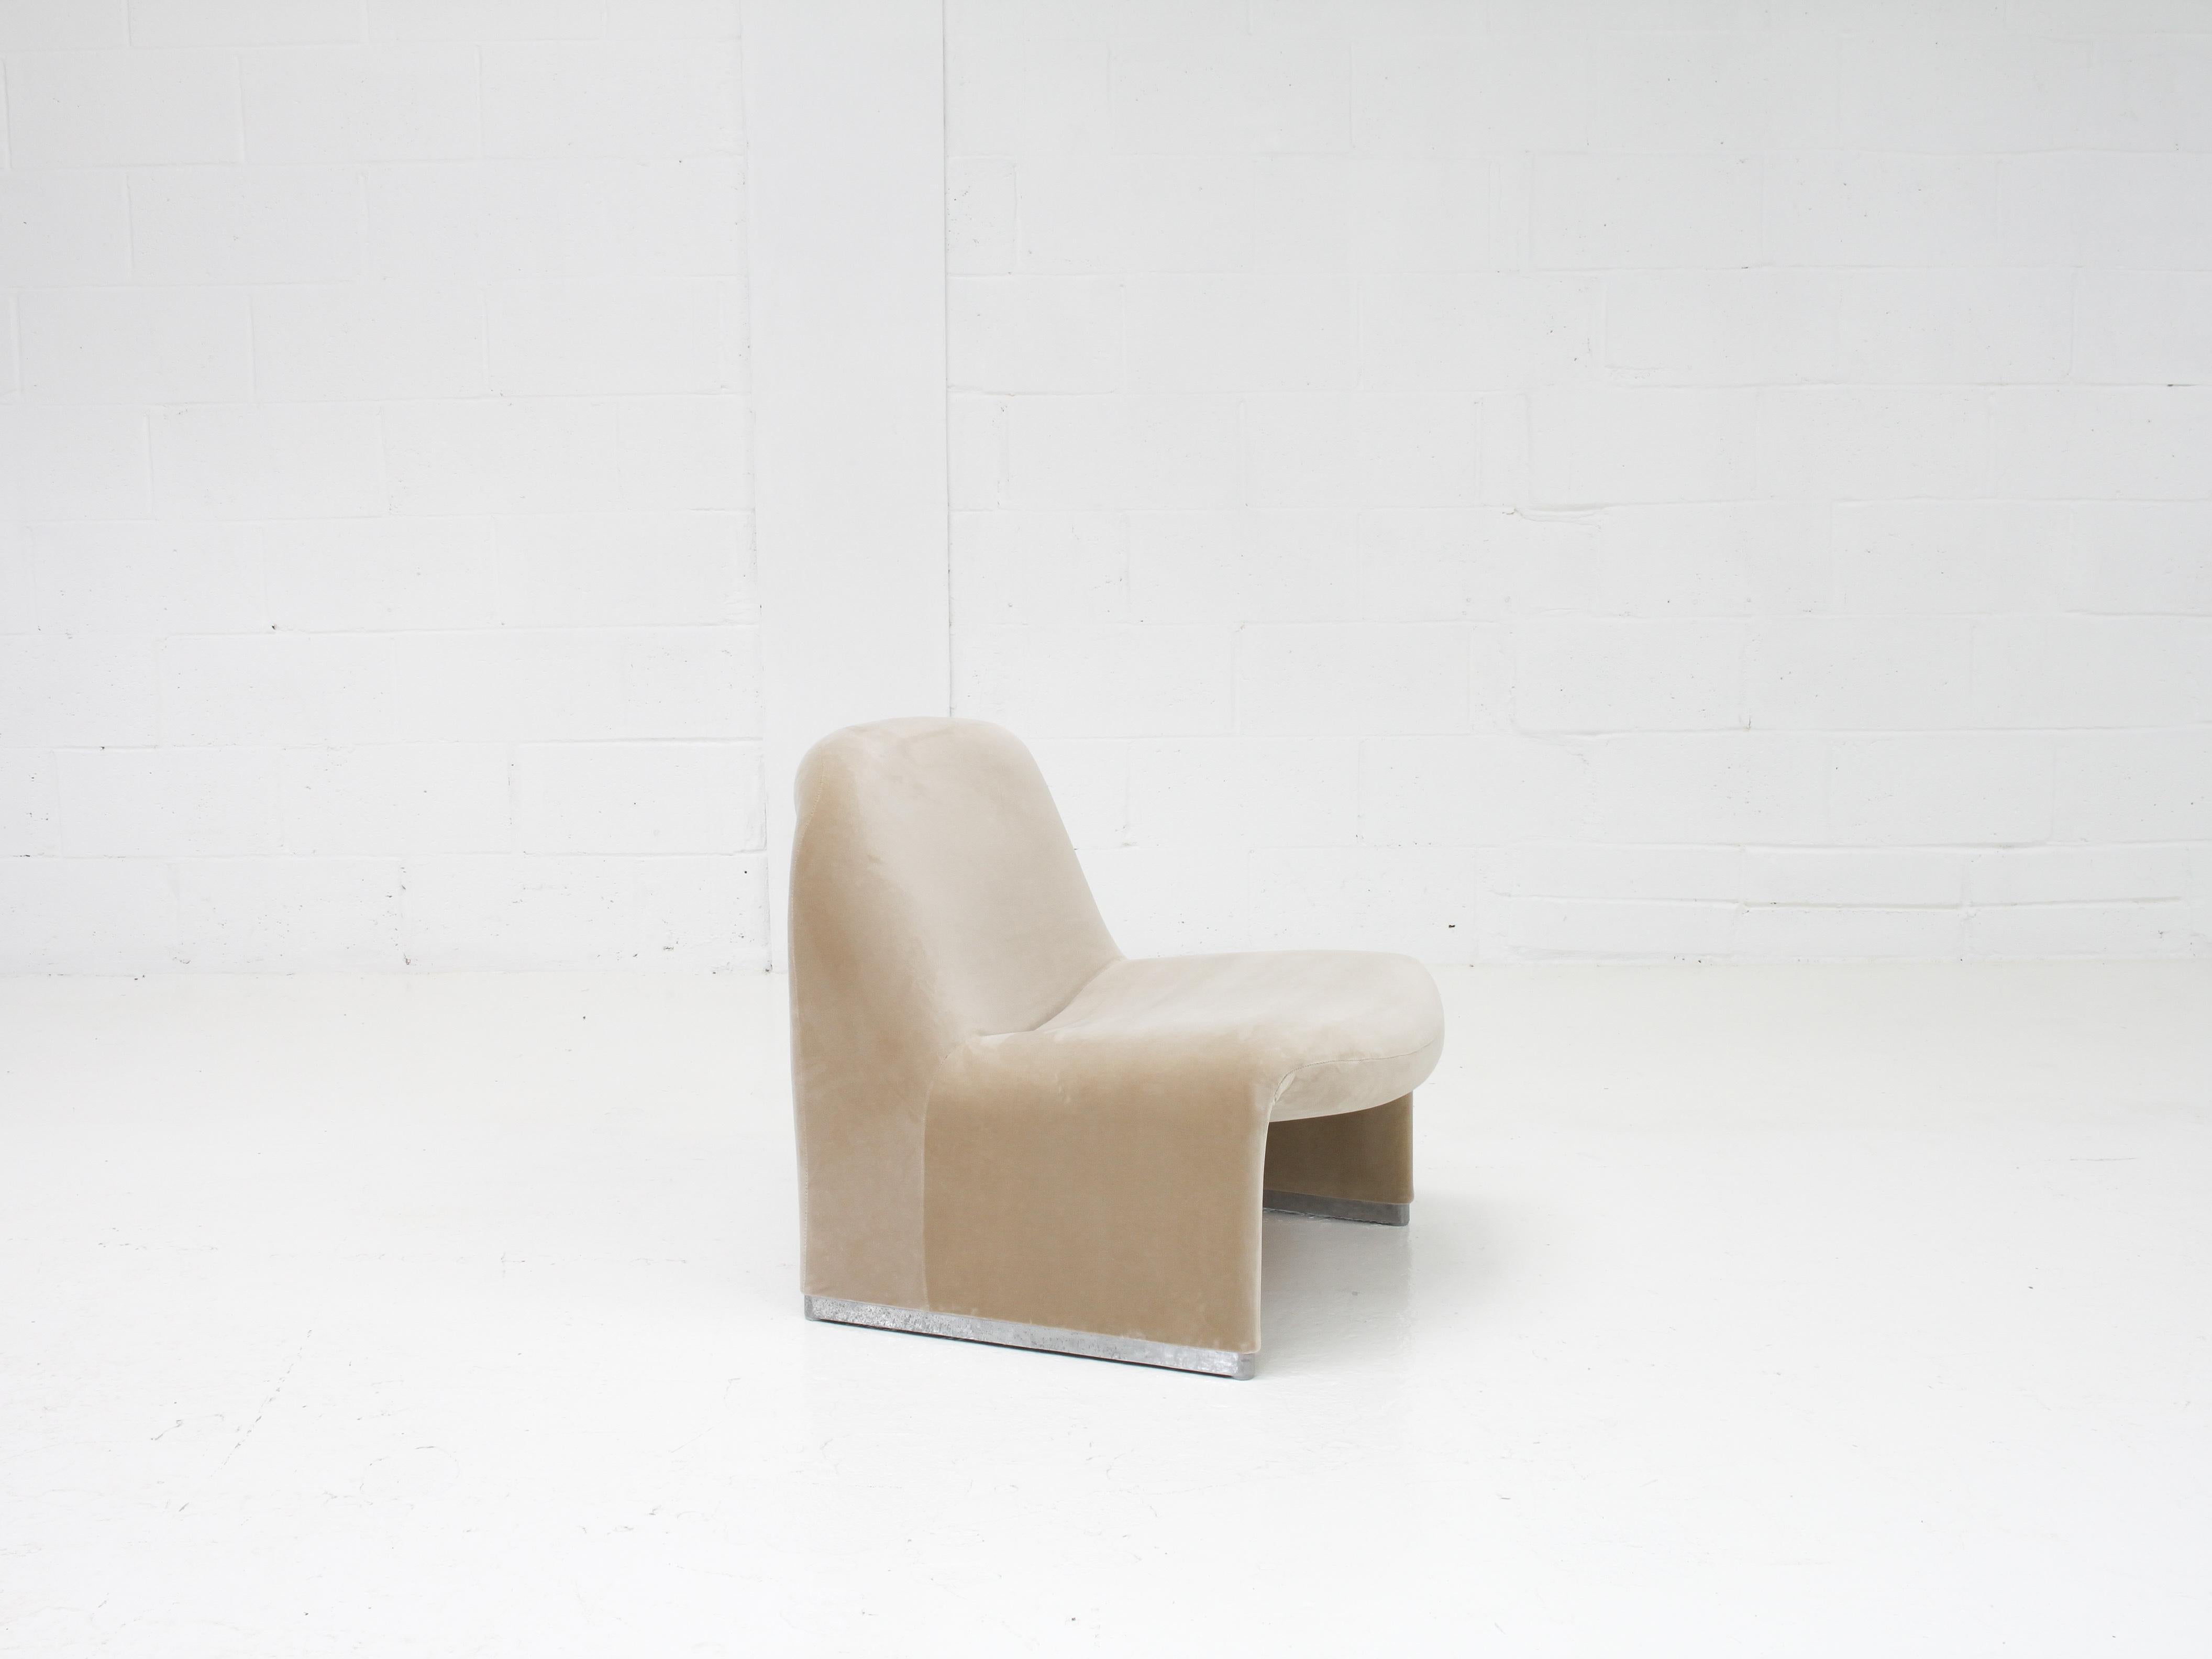 Single Giancarlo Piretti “Alky” Chair in New Velvet, Artifort, 1970s In Good Condition In London Road, Baldock, Hertfordshire